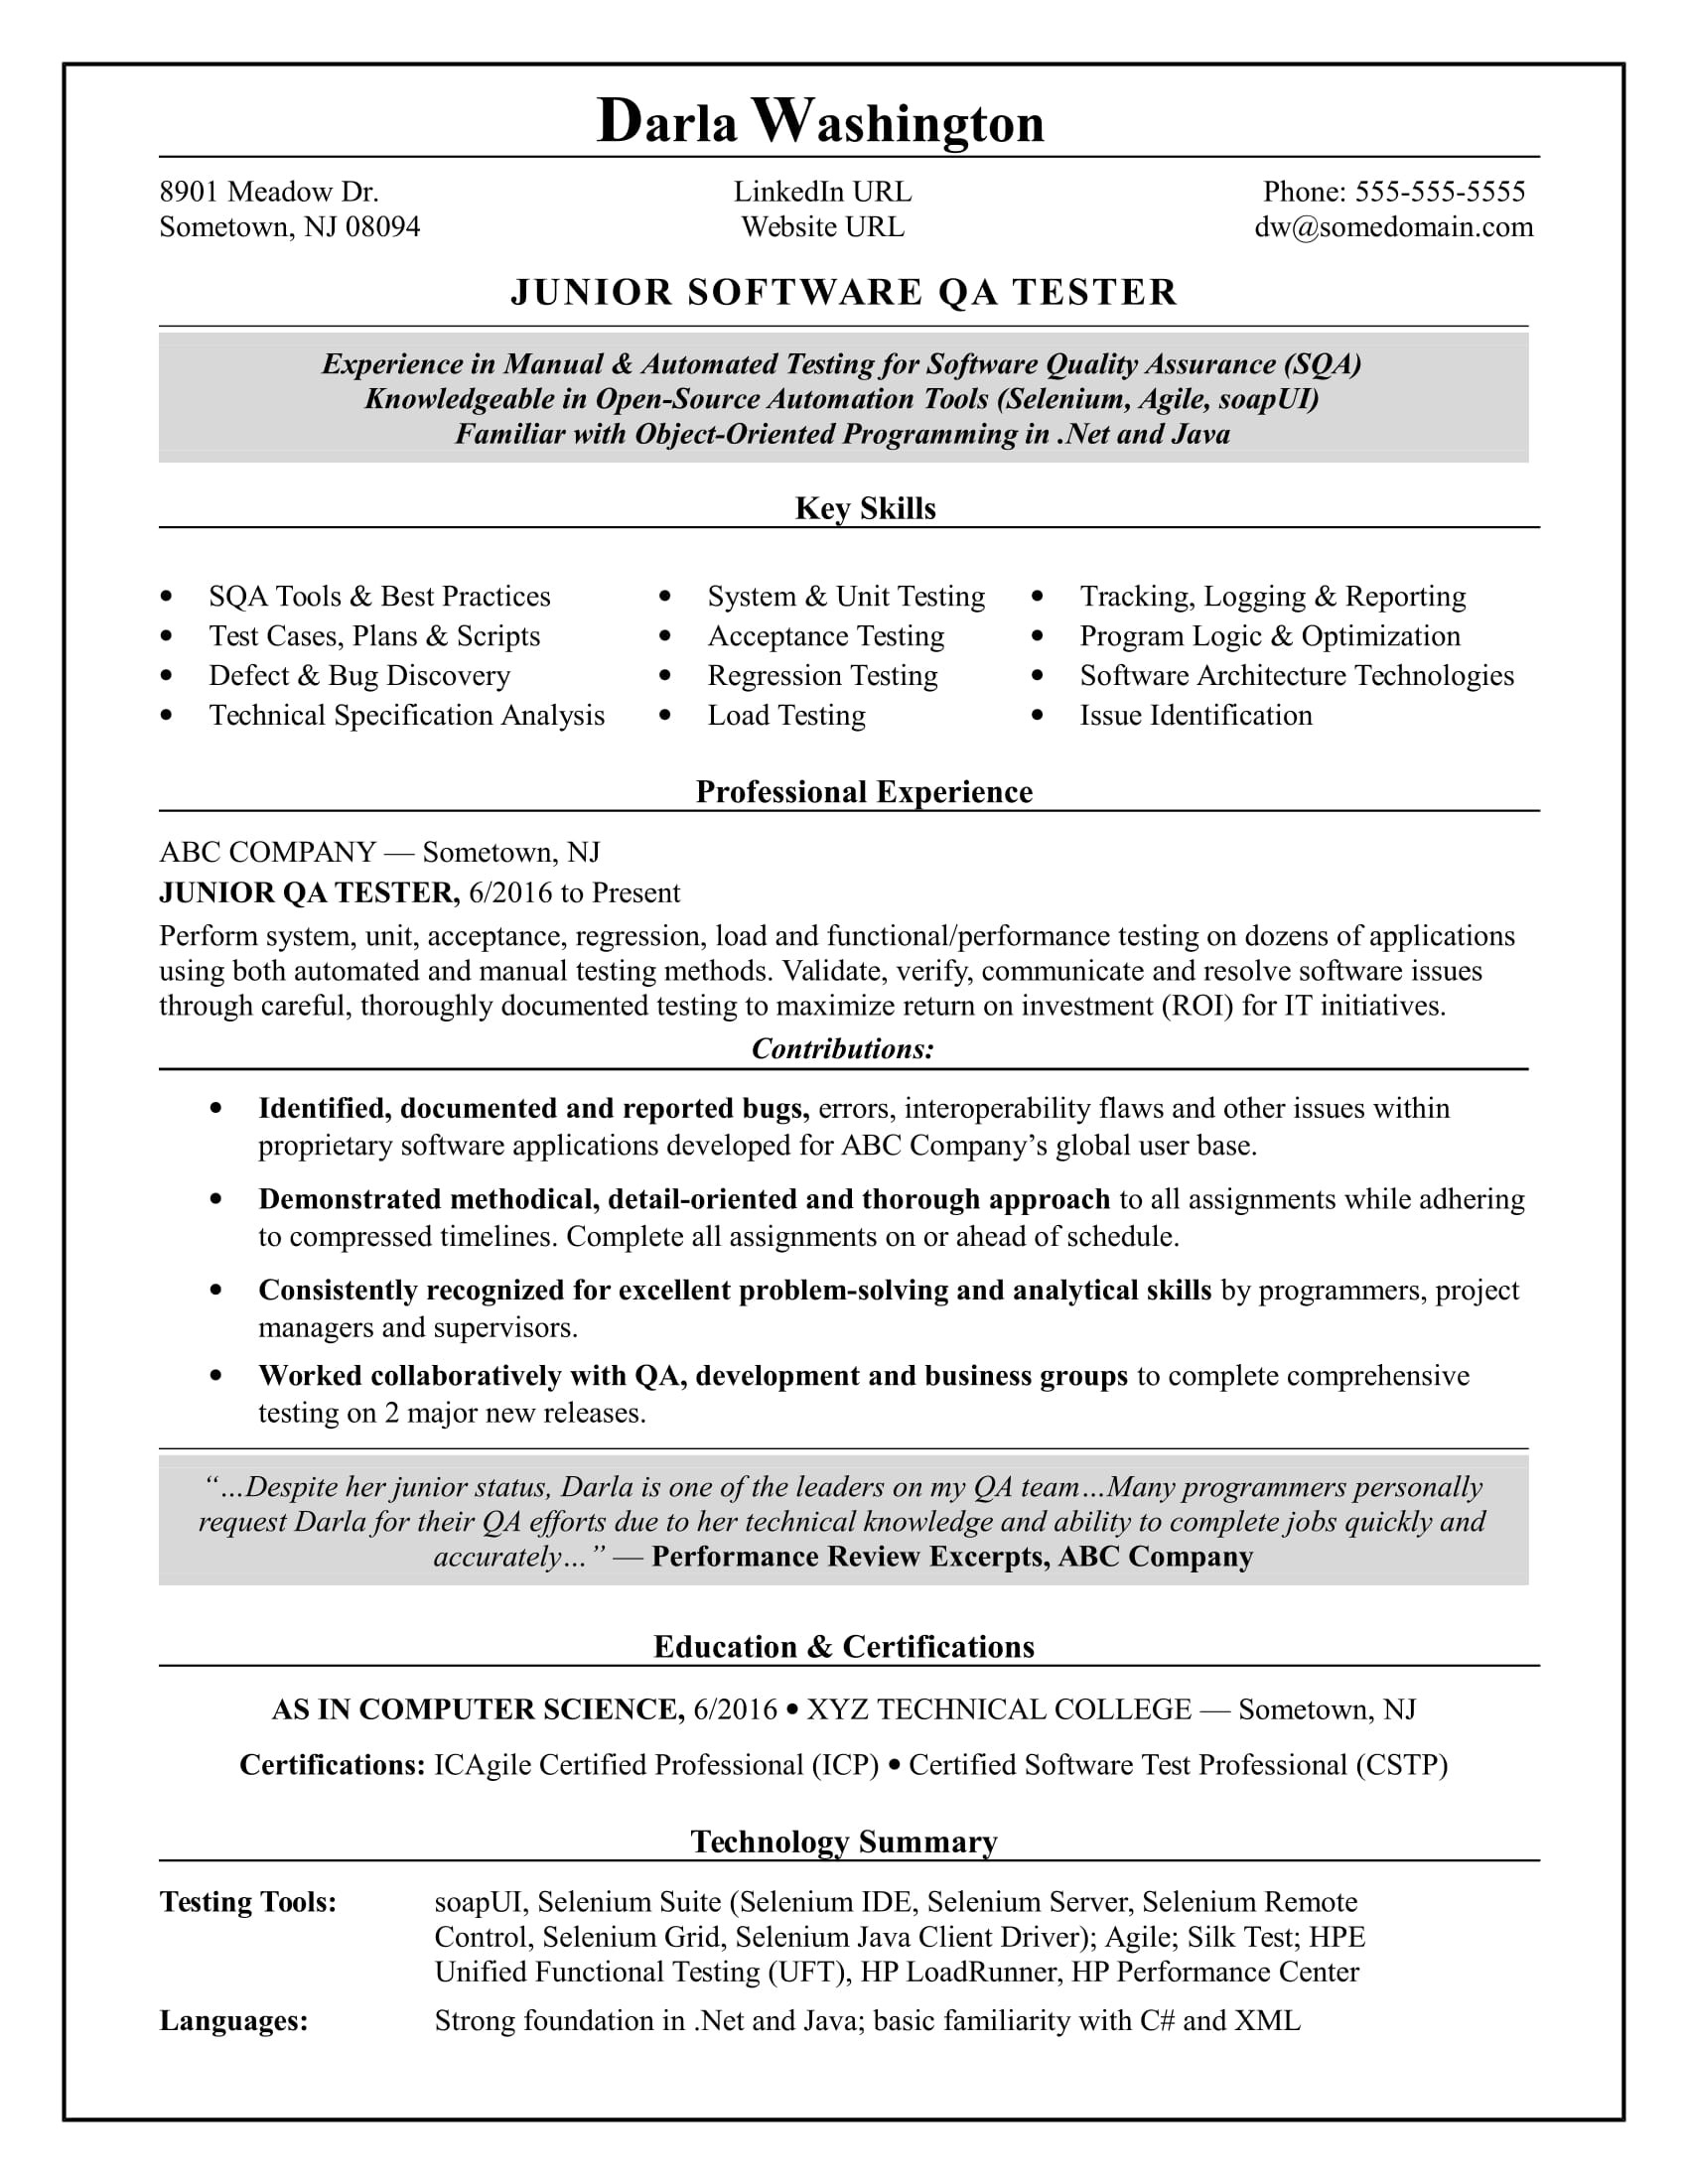 Sample Resume format for Experienced software Test Engineer Entry-level Qa software Tester Resume Sample Monster.com